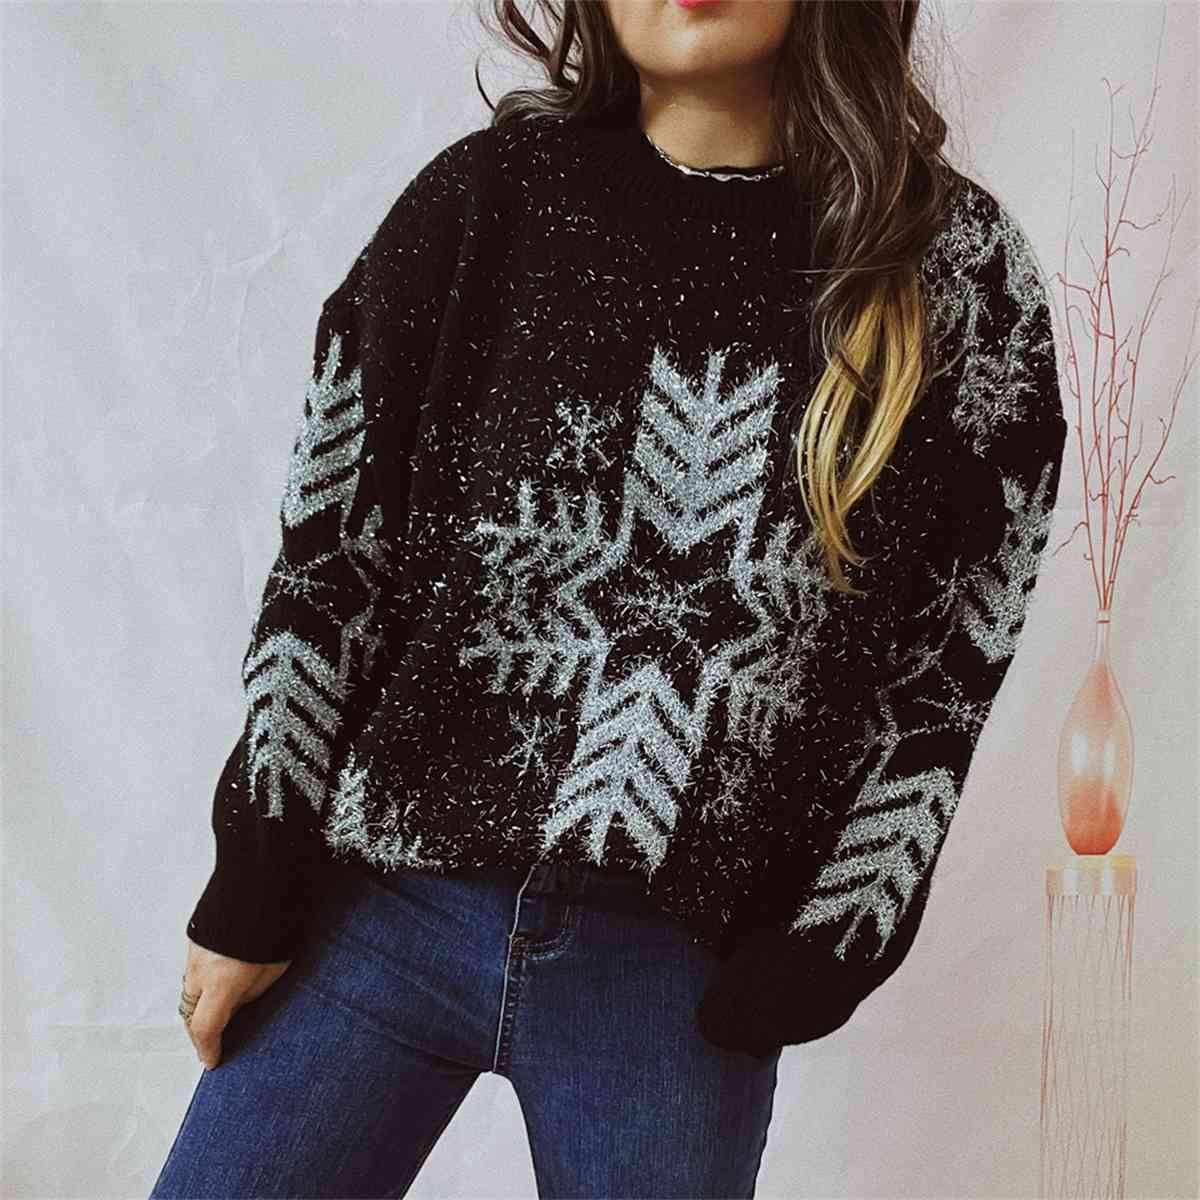 Snowflake Pattern Long Sleeve Sweater - Guy Christopher 